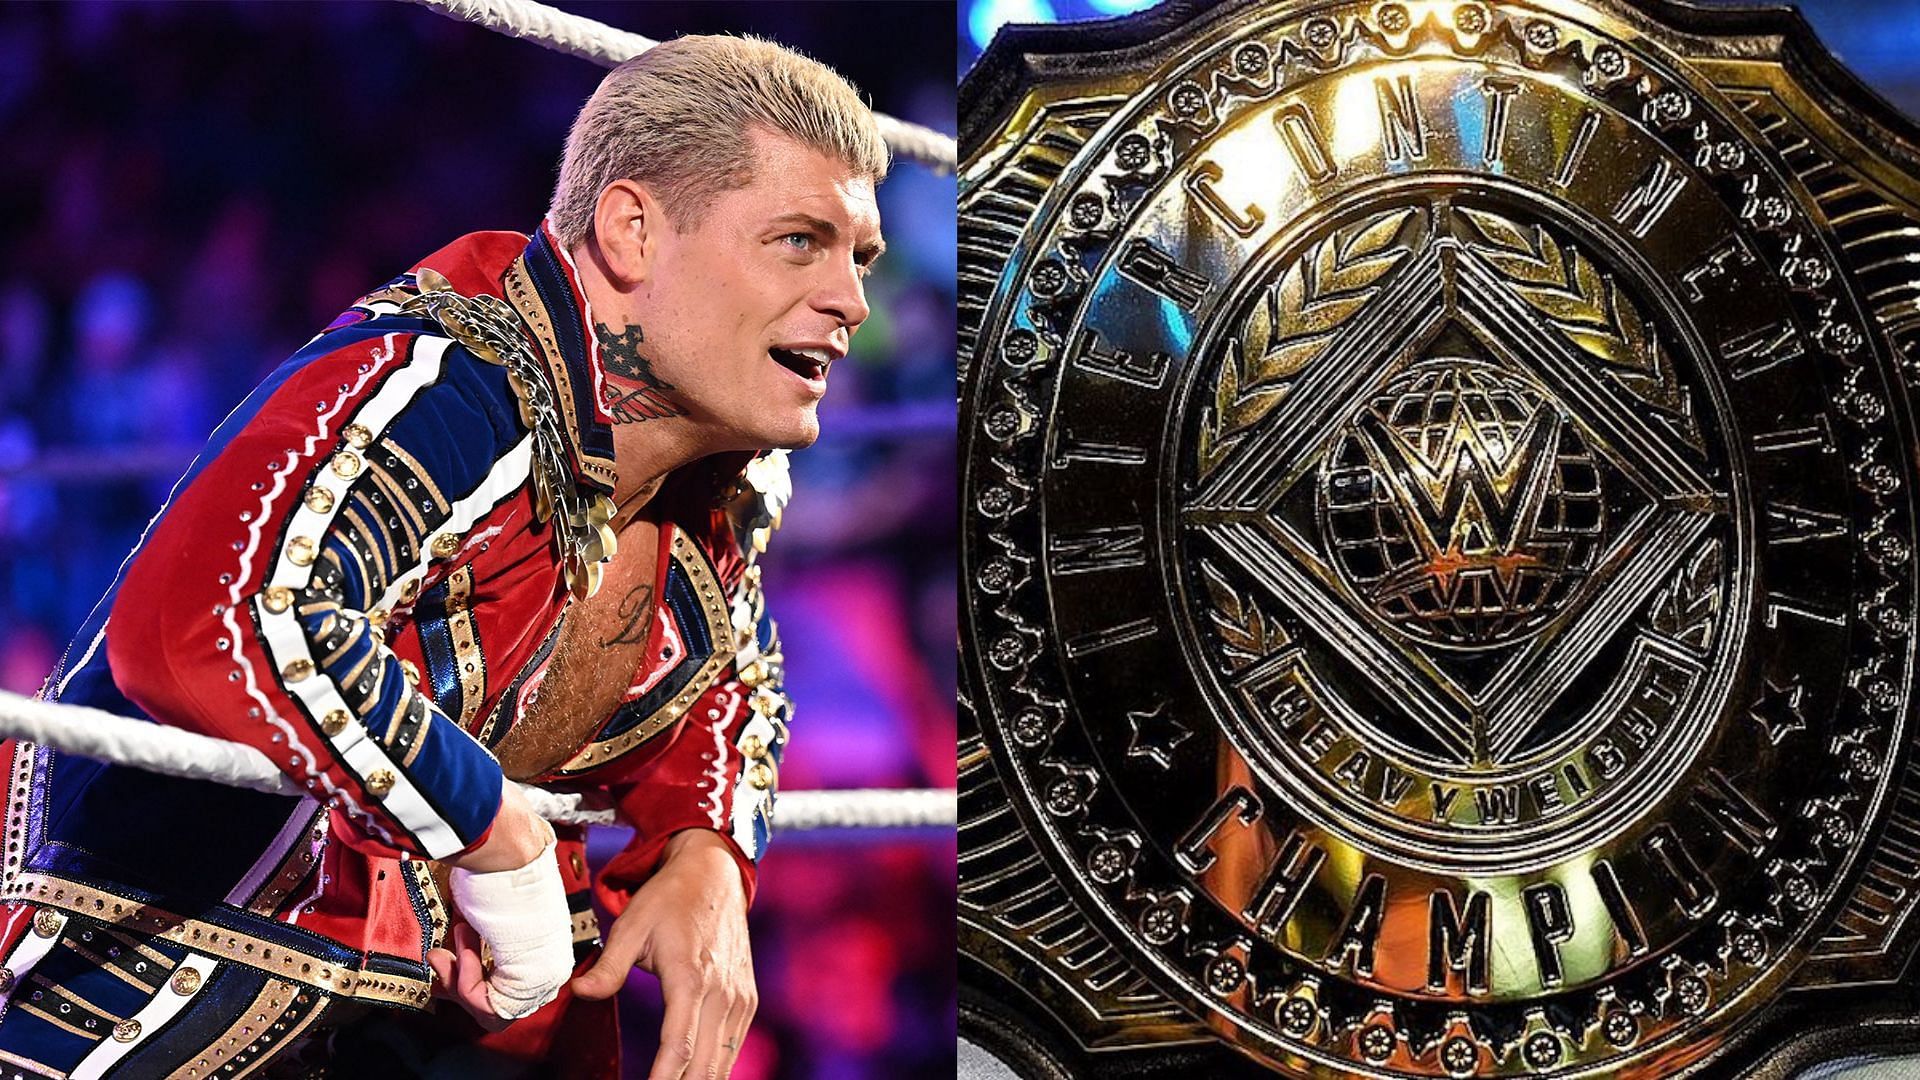 Cody Rhodes is former WWE Intercontinental Champion